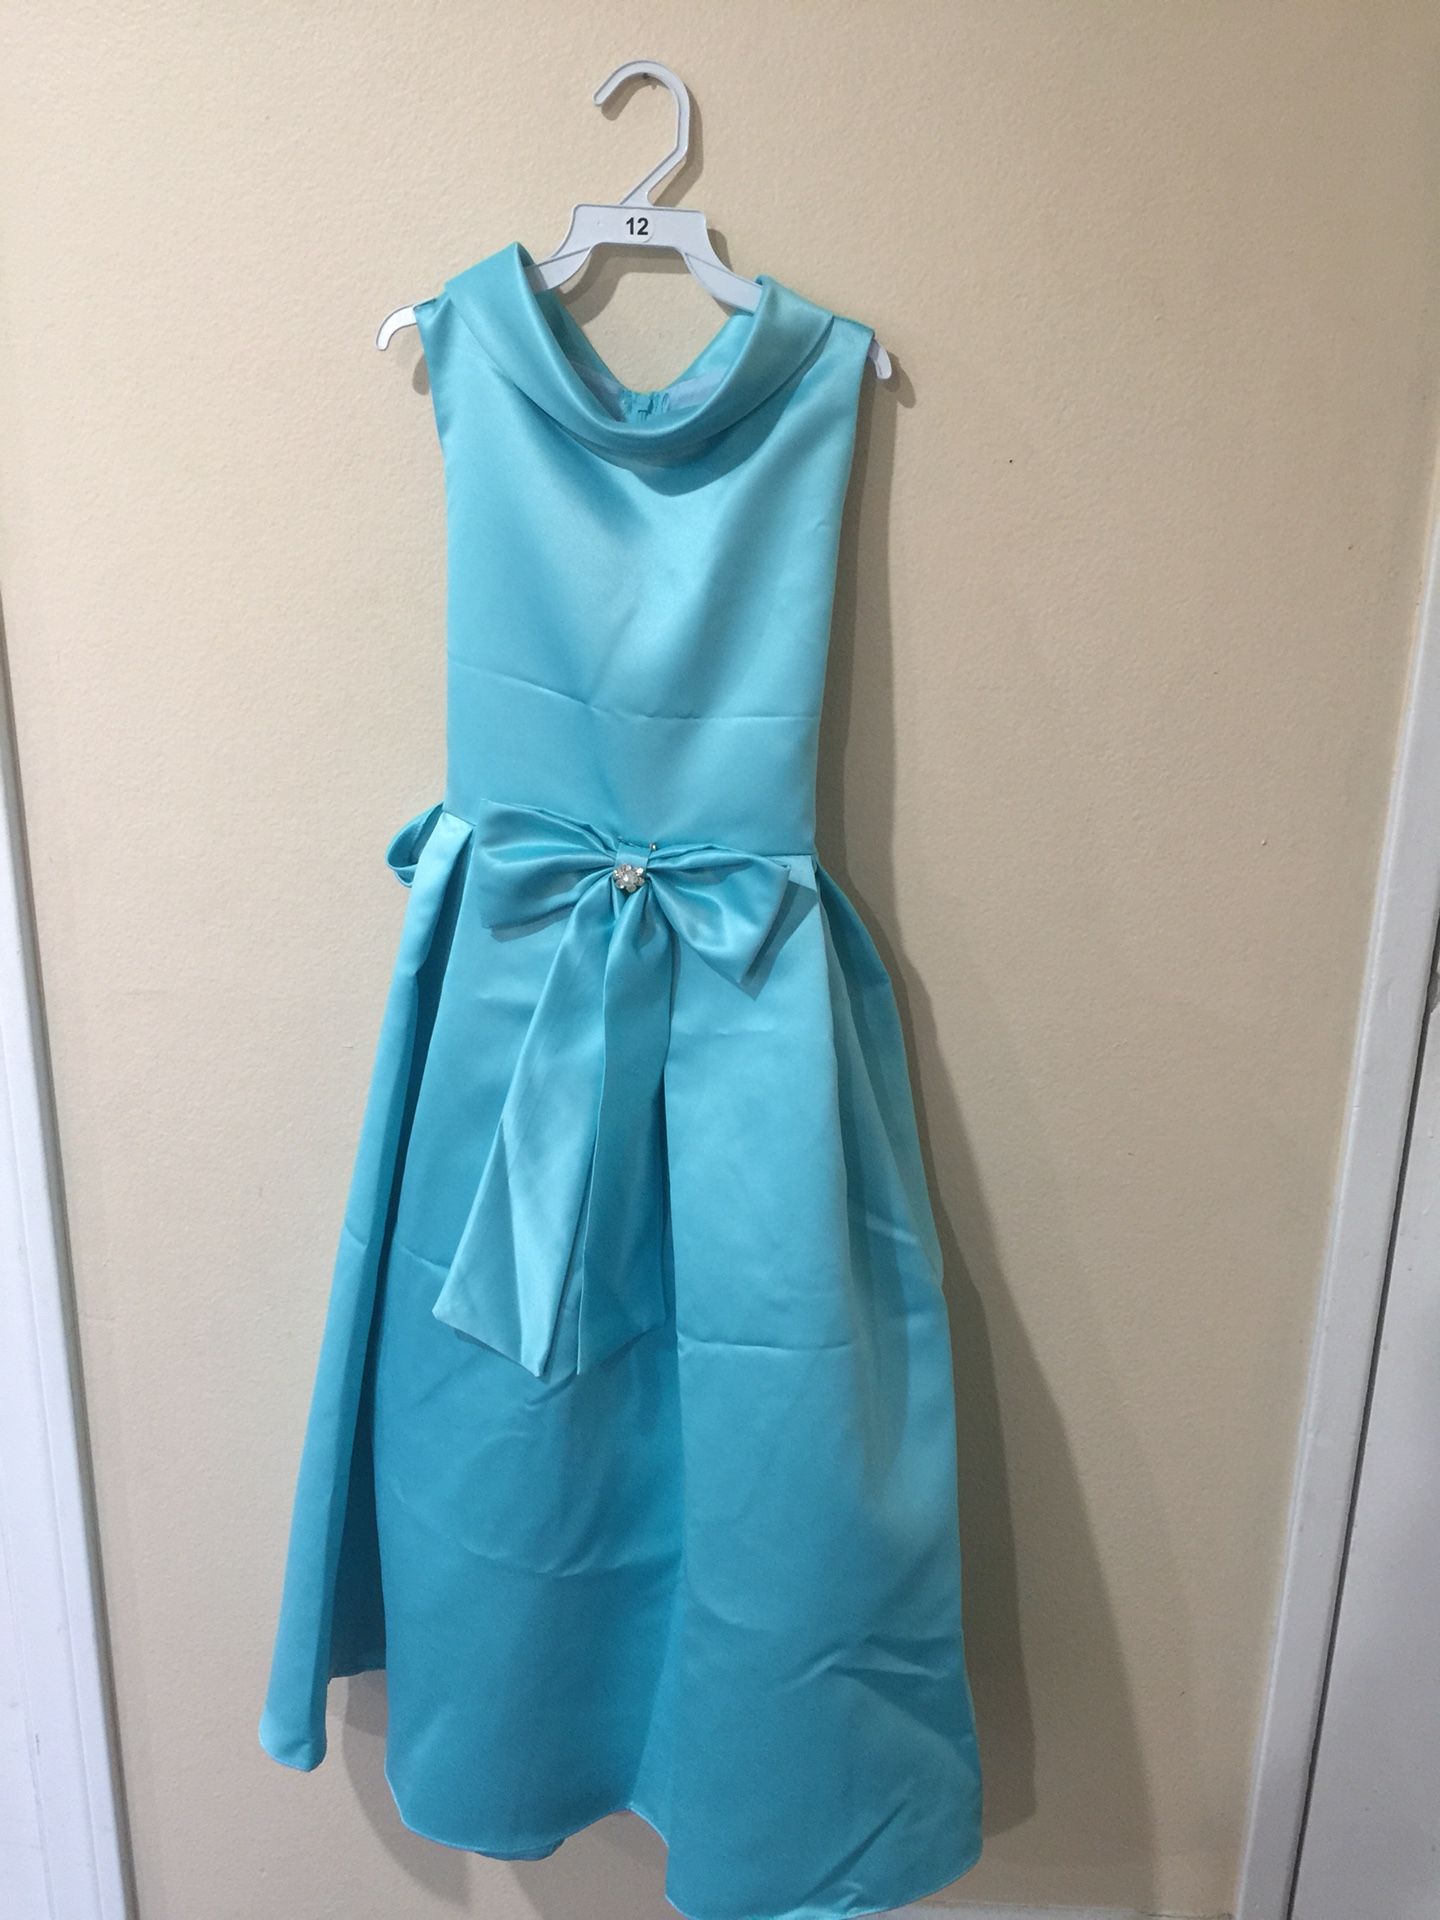 New Aqua Blue Flower Girls Party Dress Size 12